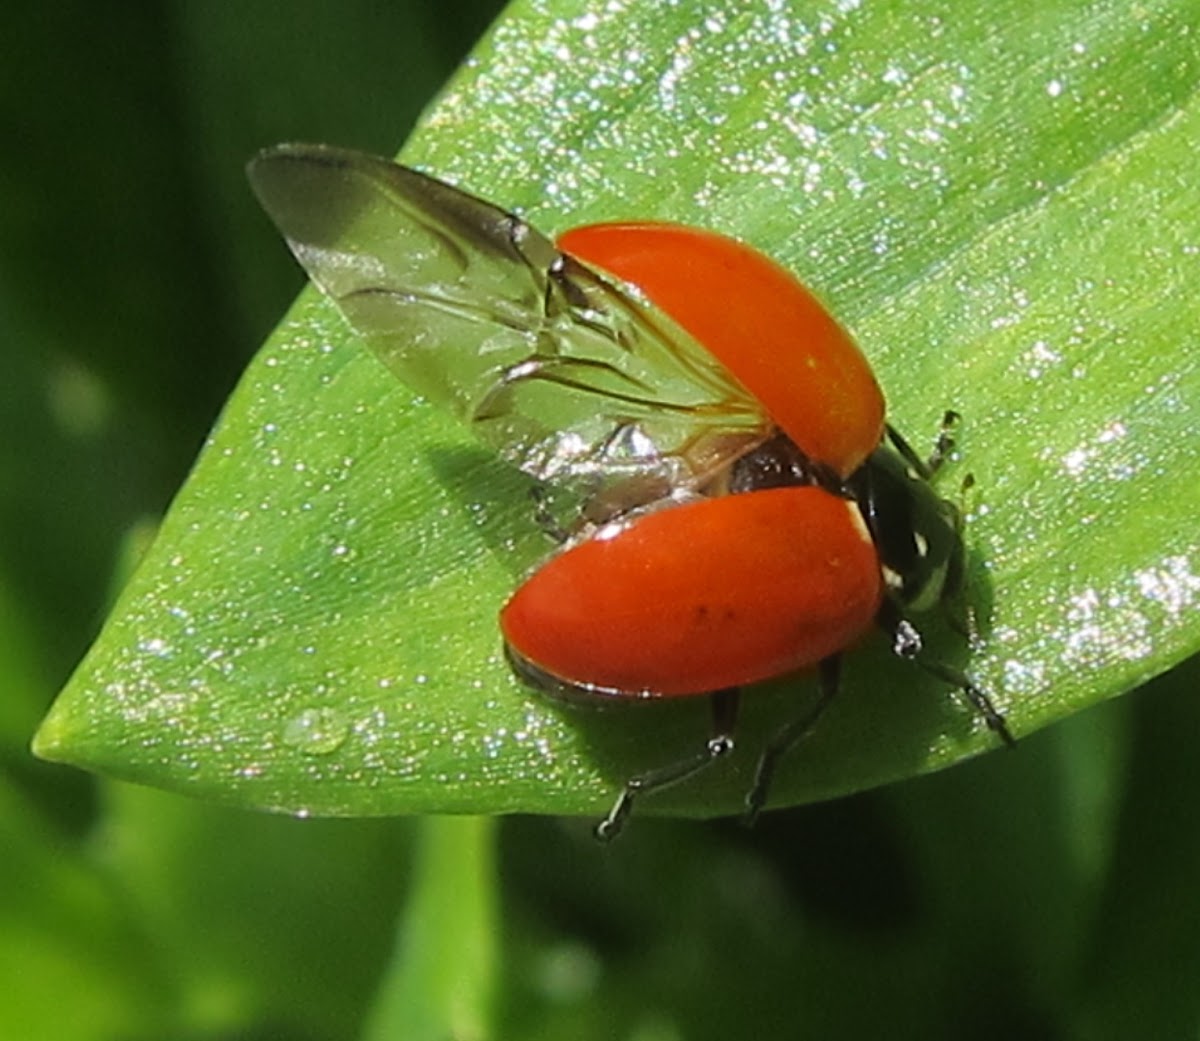 Hippodamia quinquesignata ambigua ladybug